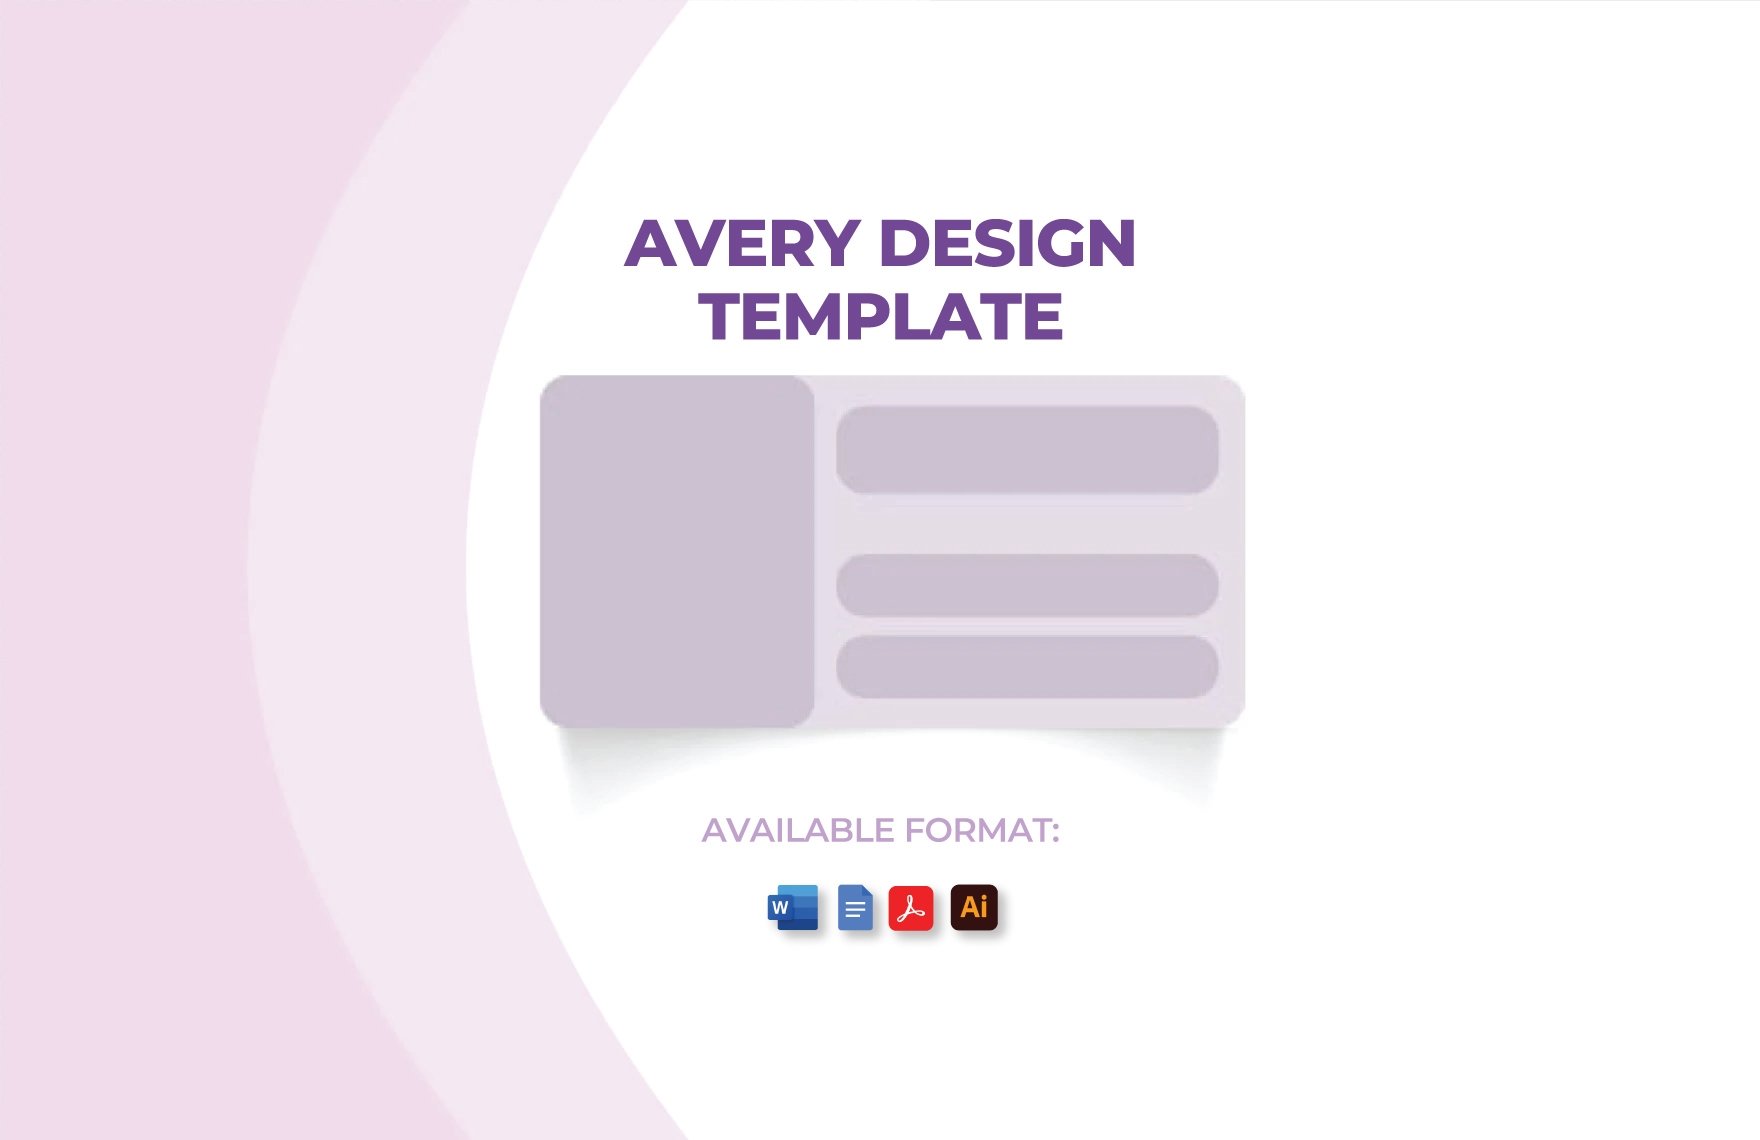 Free Avery Design Template in Word, Google Docs, PDF, Illustrator